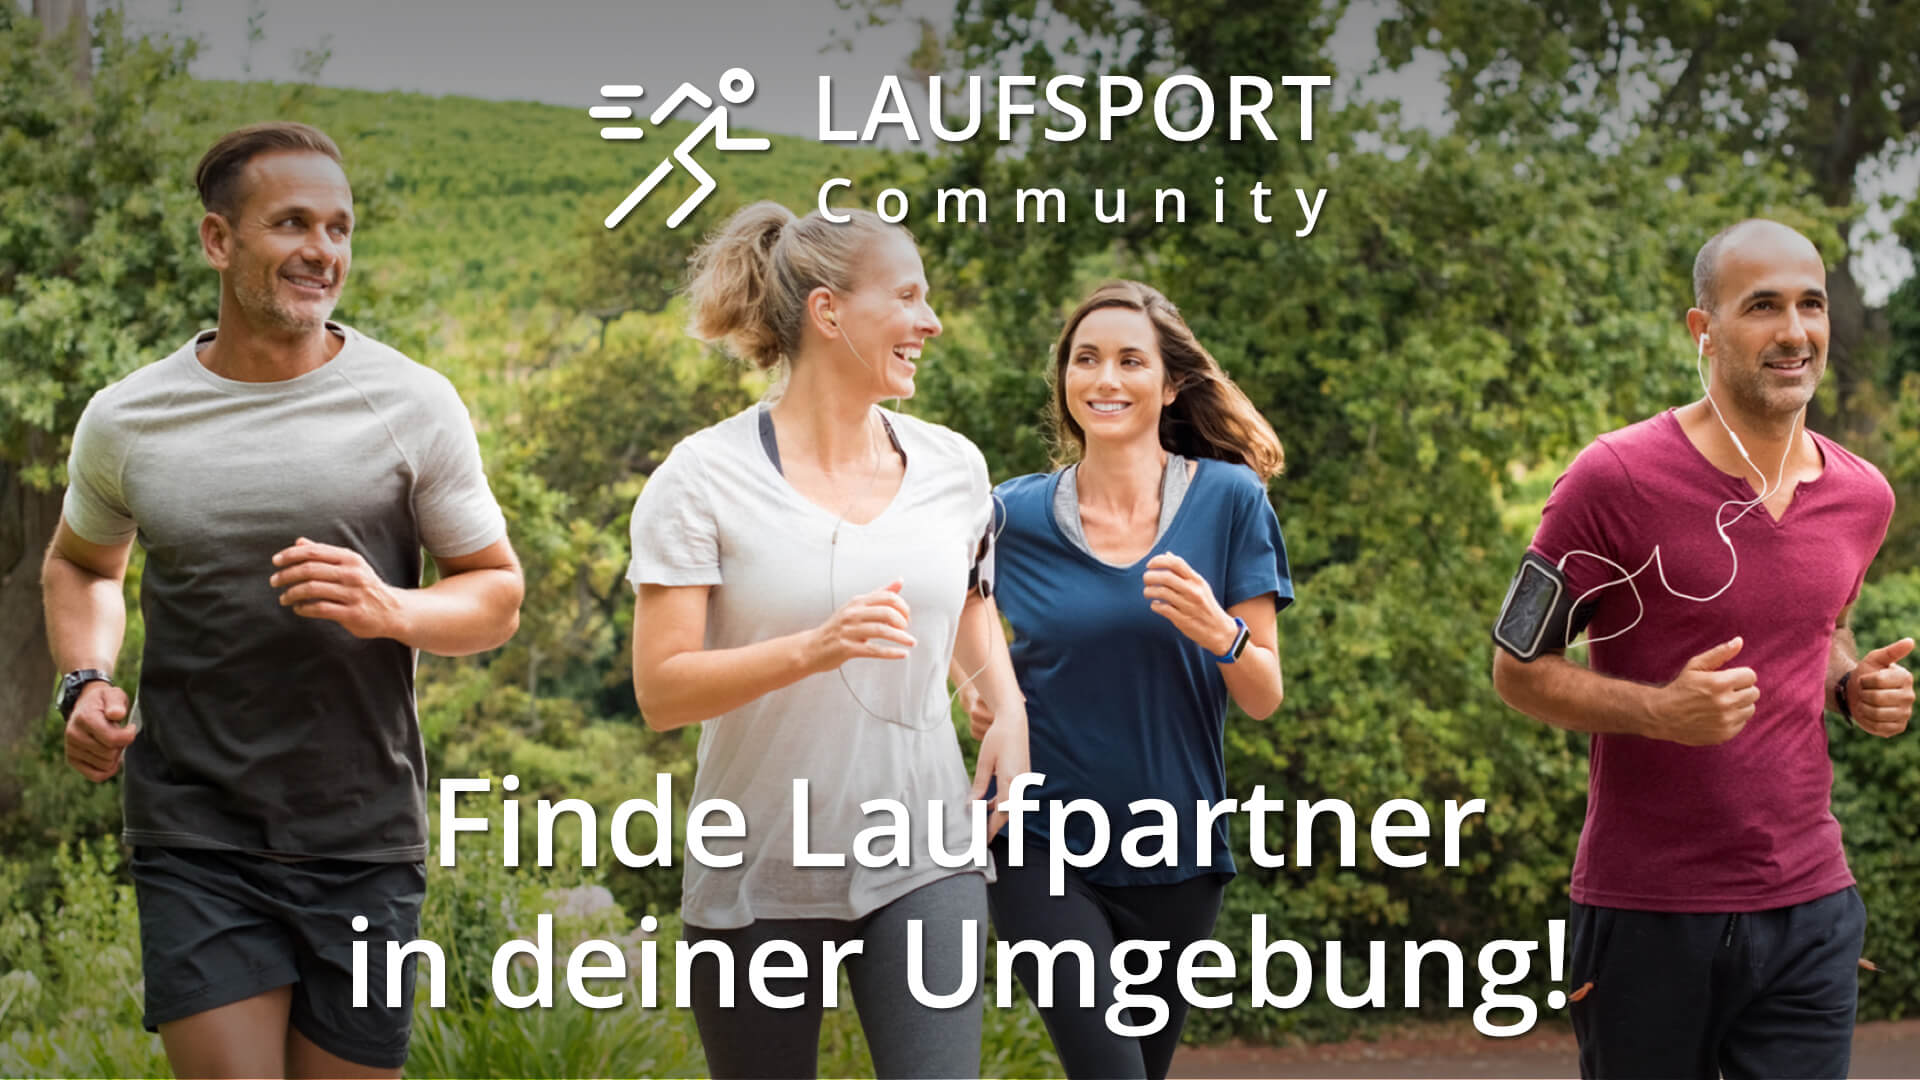 (c) Laufsport.community